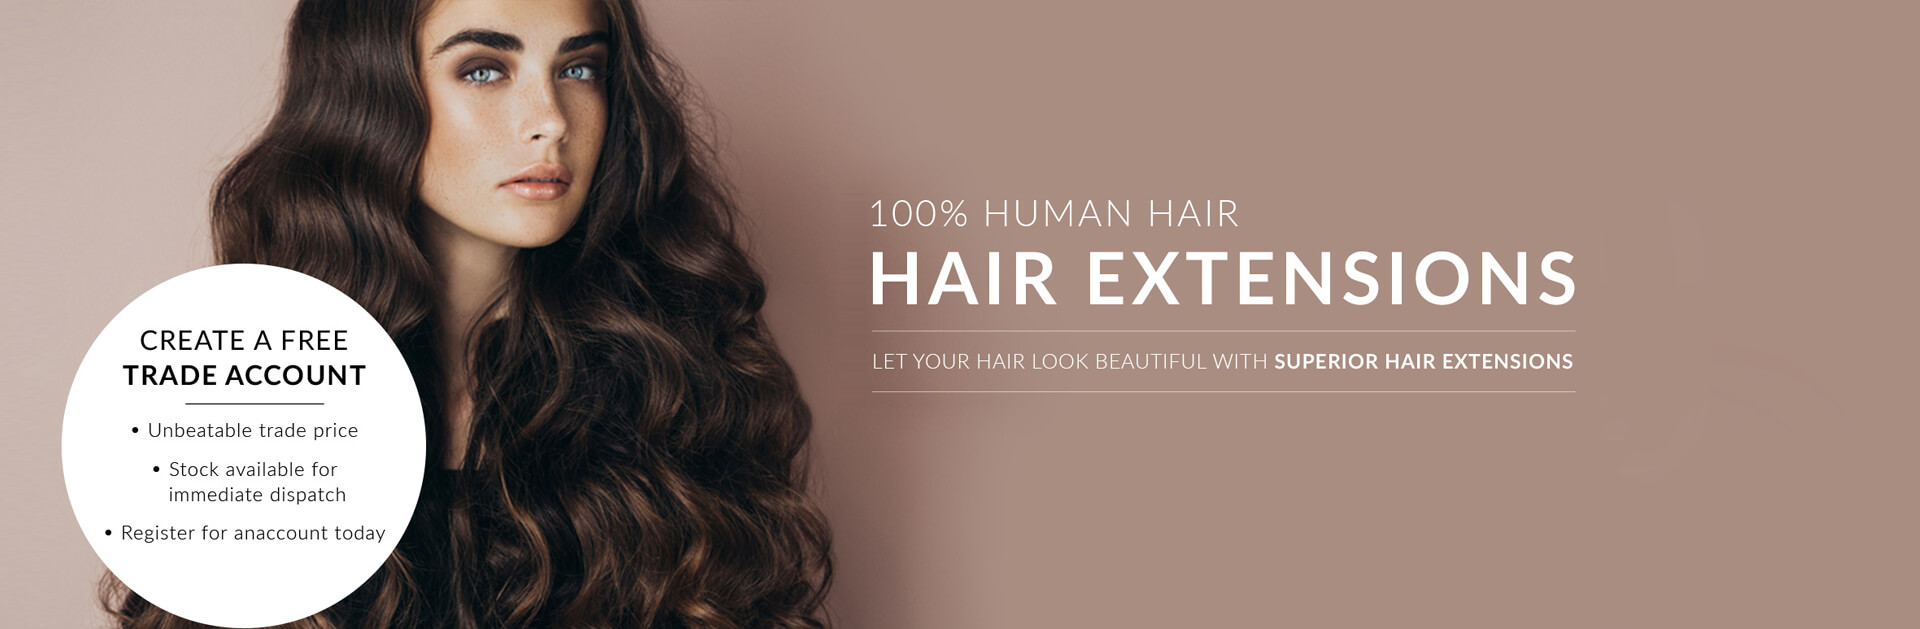 Website Design for hair Extension brand